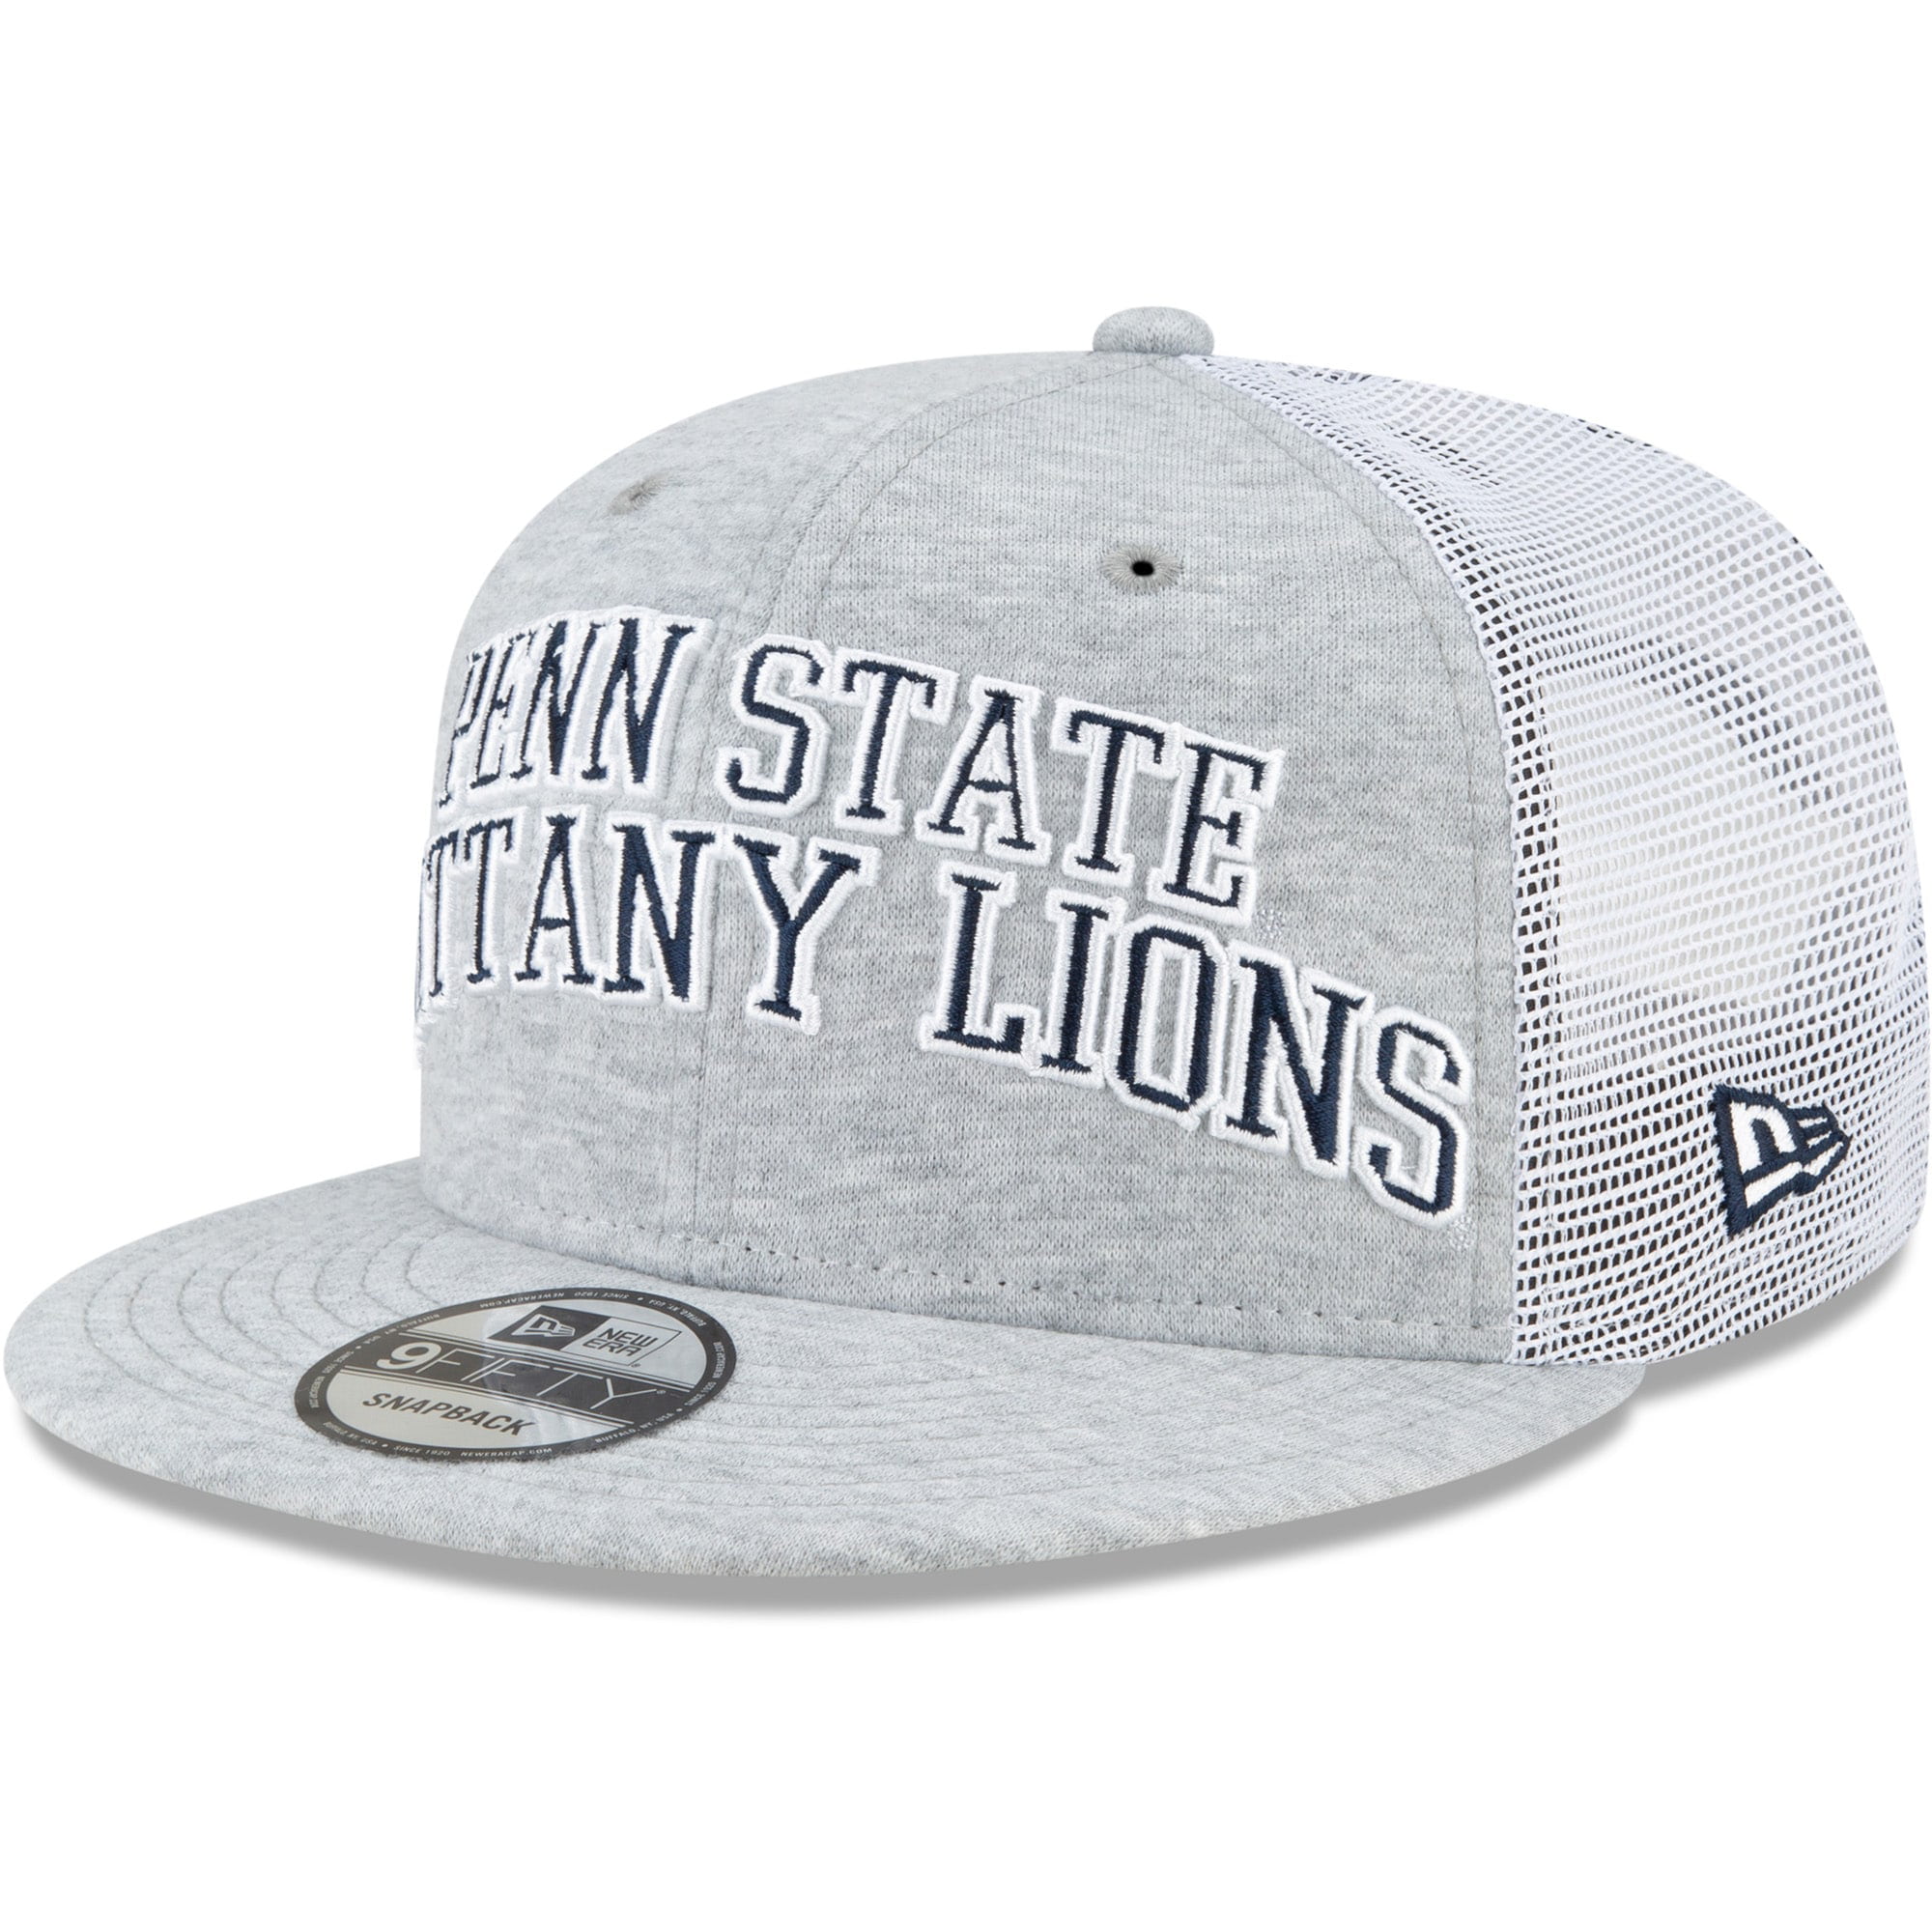 Vintage Clemson Tigers Arch Logo Snapback hat